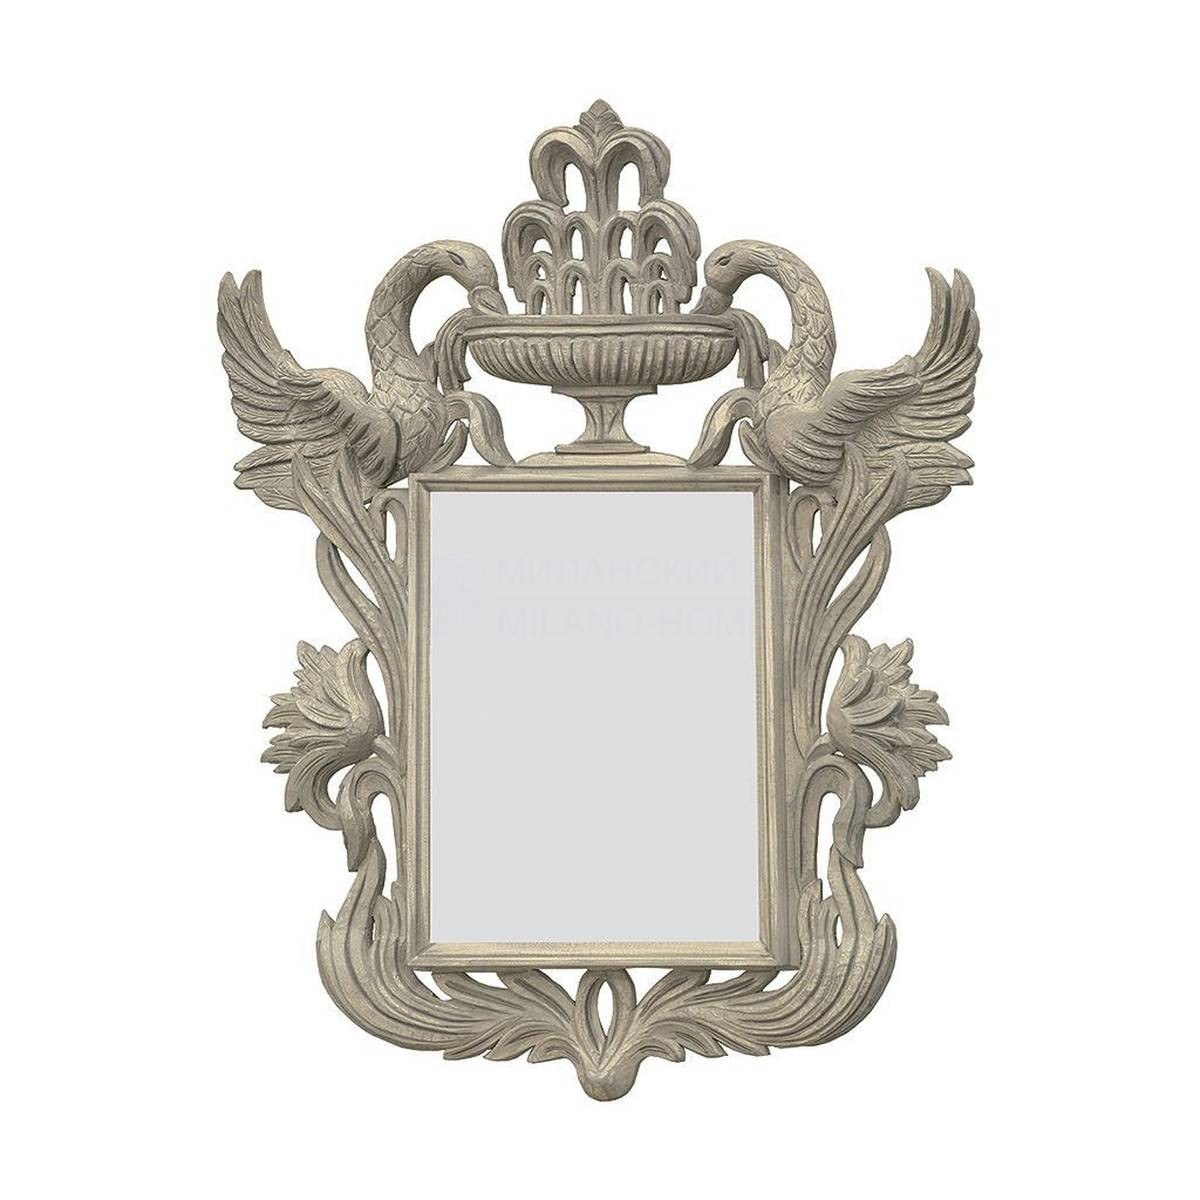 Зеркало настенное M-1273 mirror из Испании фабрики GUADARTE